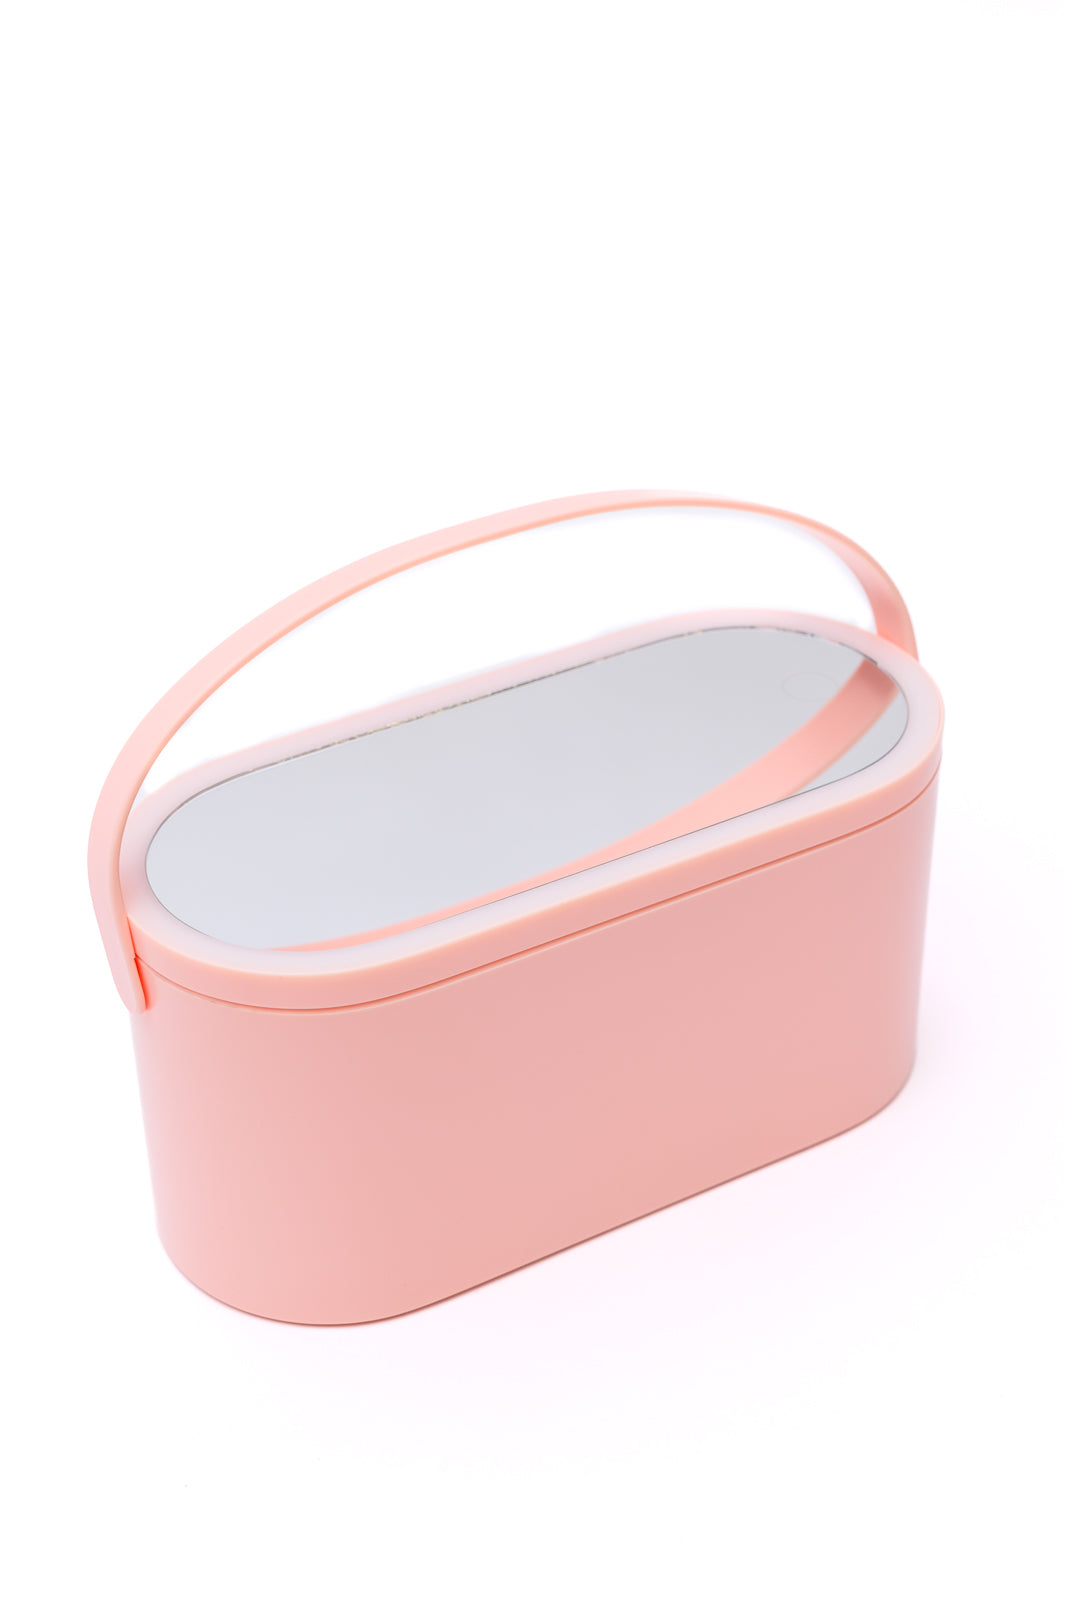 Portable Beauty Storage & LED Mirror